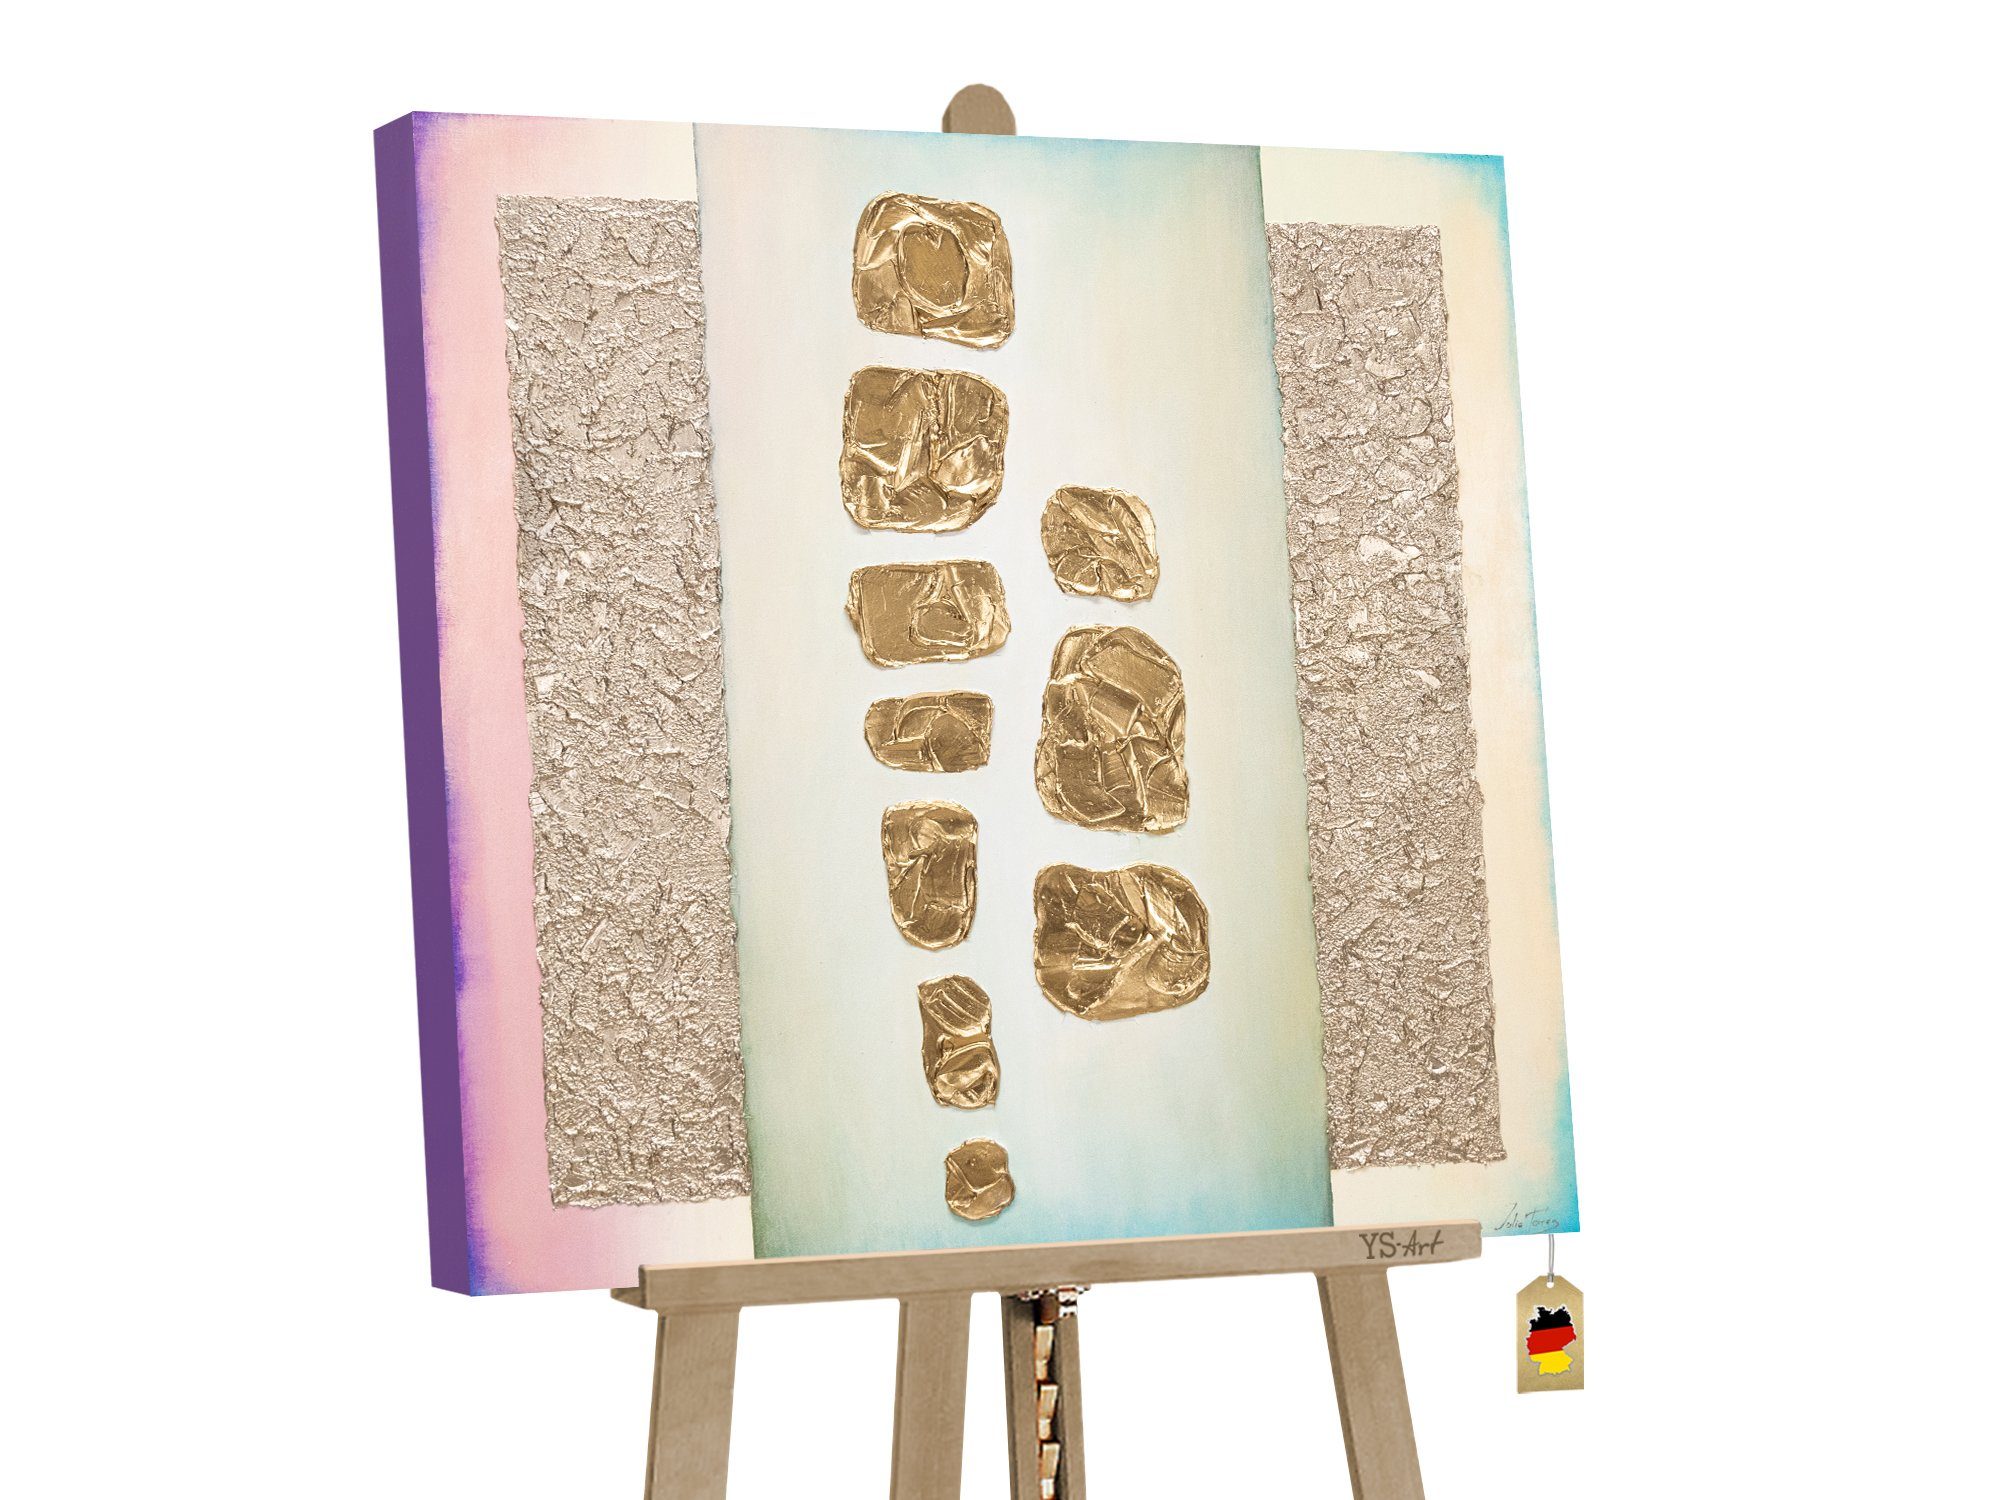 YS-Art Gemälde Goldfunkel, Abstrakte Bilder, Abstraktes auf Leinwand Bild Handgemalt Bunt Gold Lila Grün | Gemälde